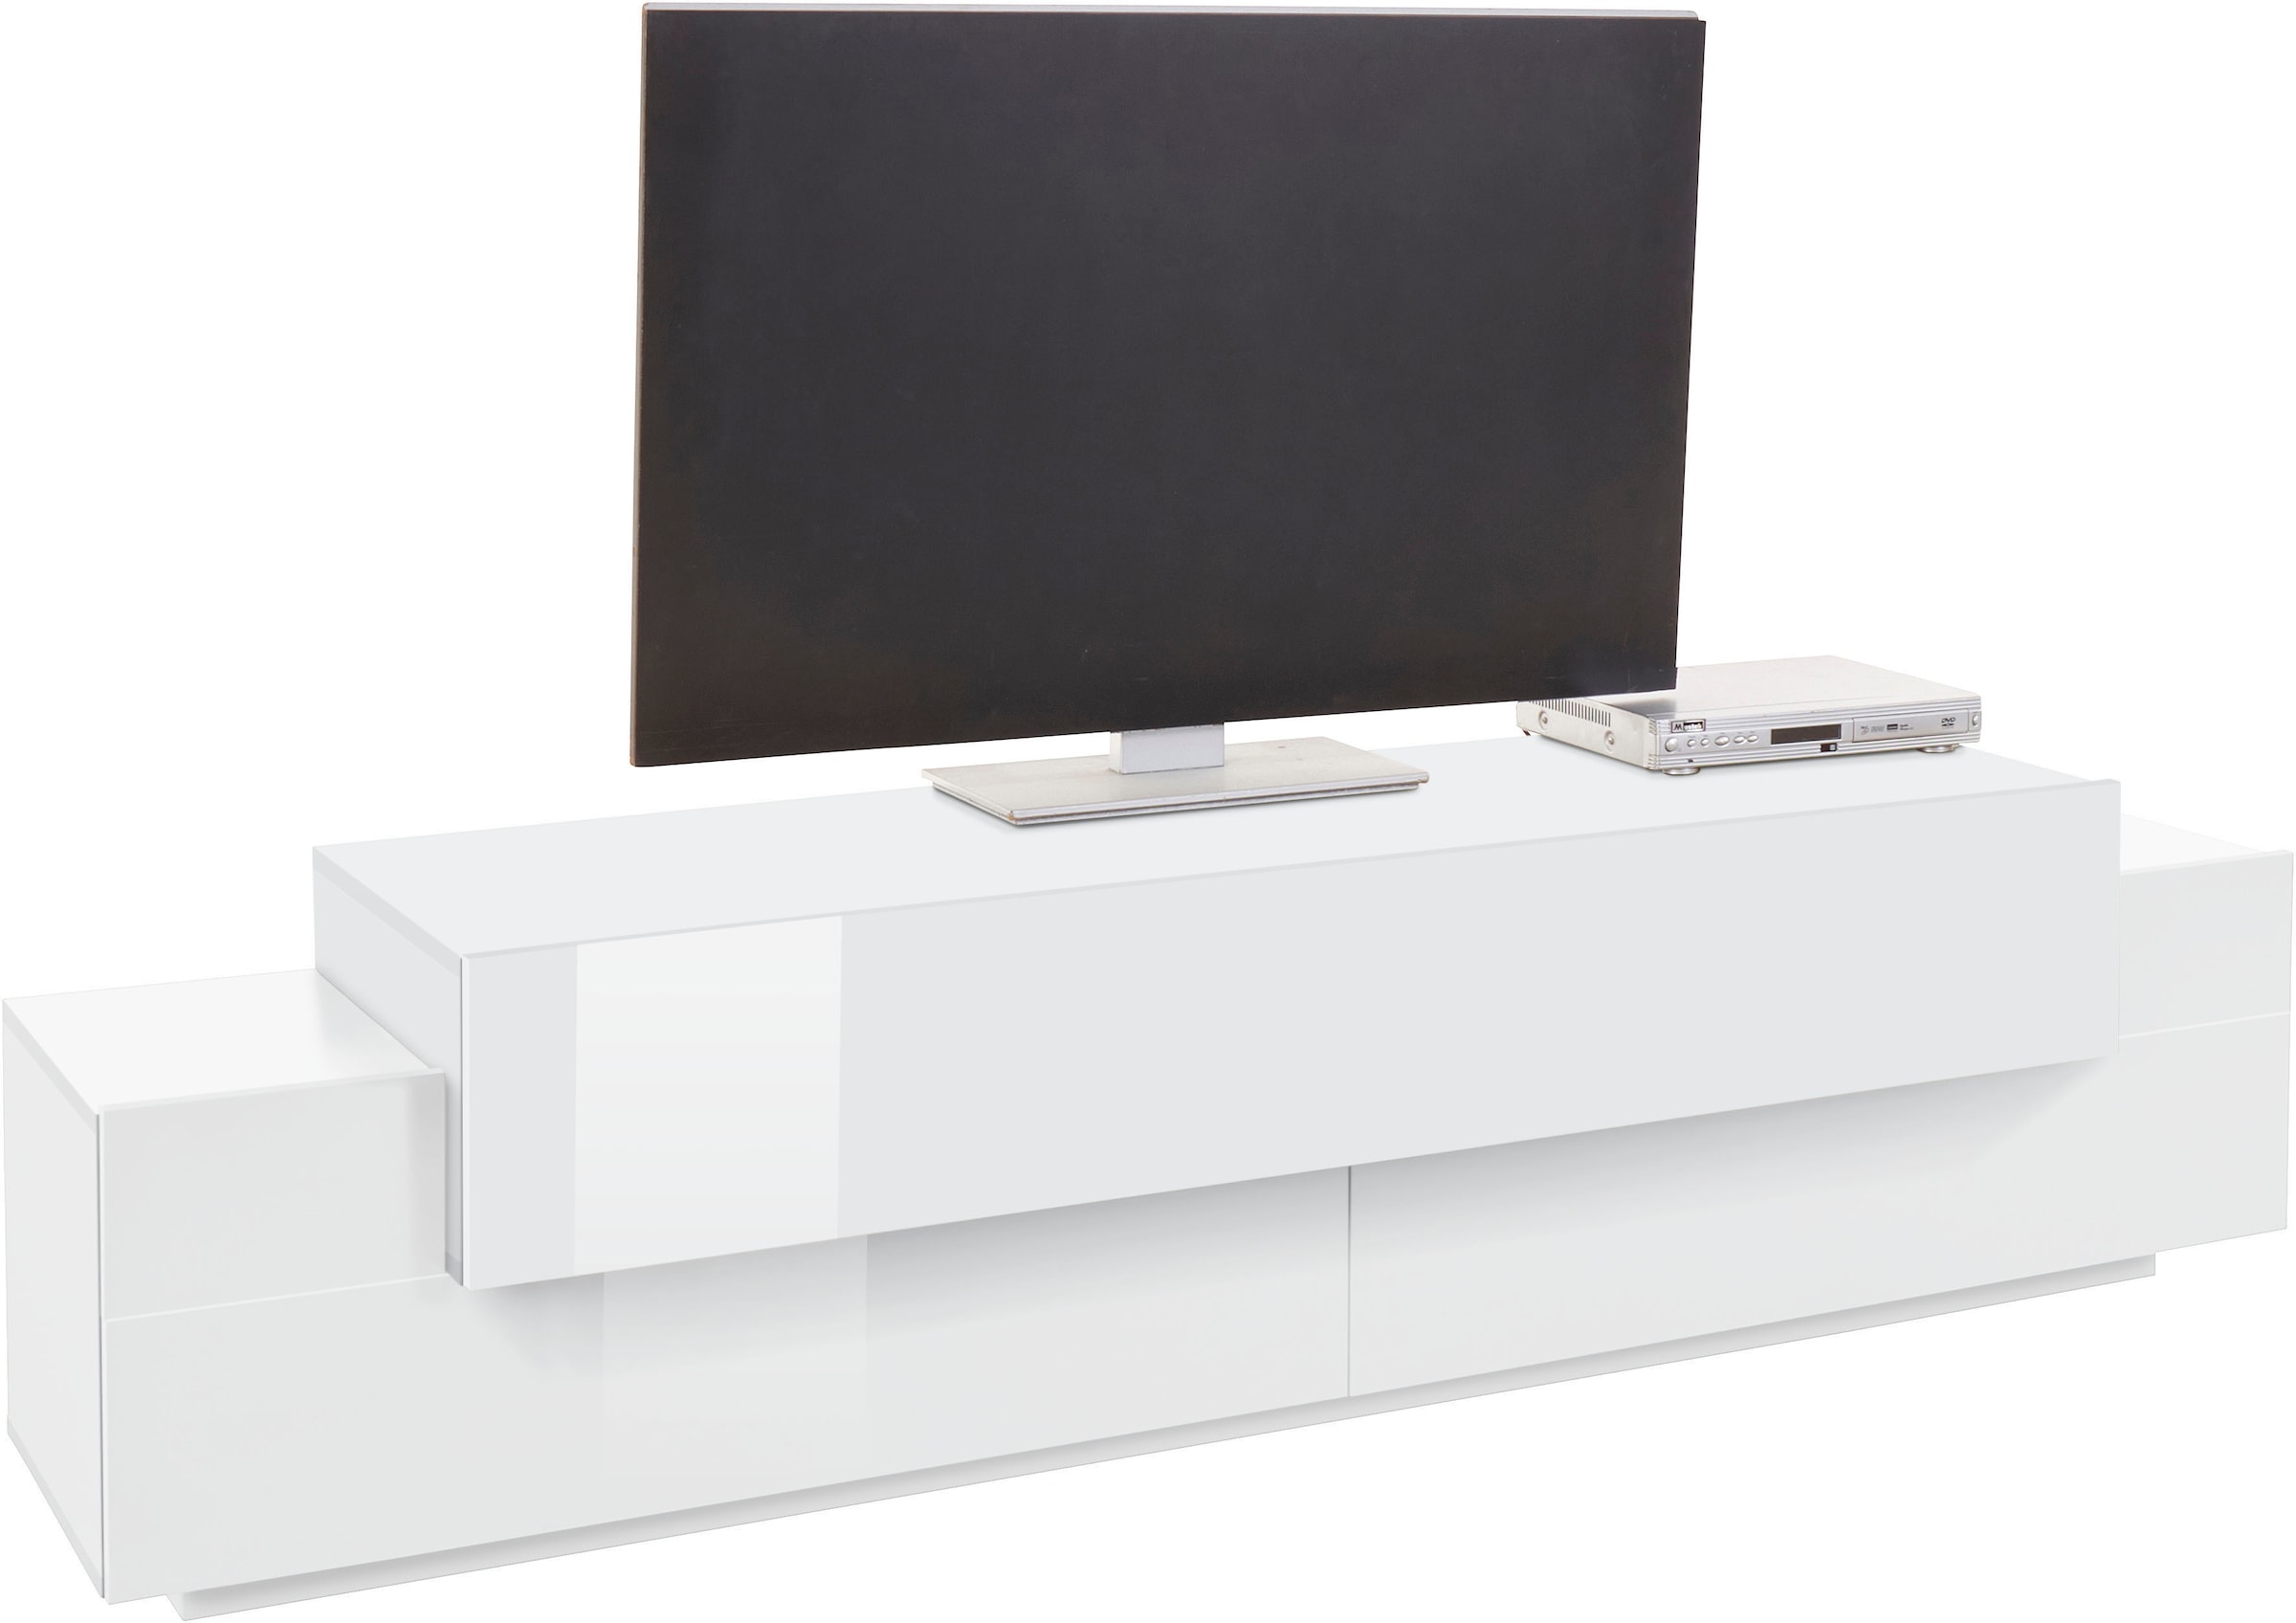 INOSIGN Lowboard »Coro,Lowboard,TV-Kommode,TV-Möbel,TV-Bank«, mit 3 Klappen davon 2 mit Push-to-Open Funktion Breite 200